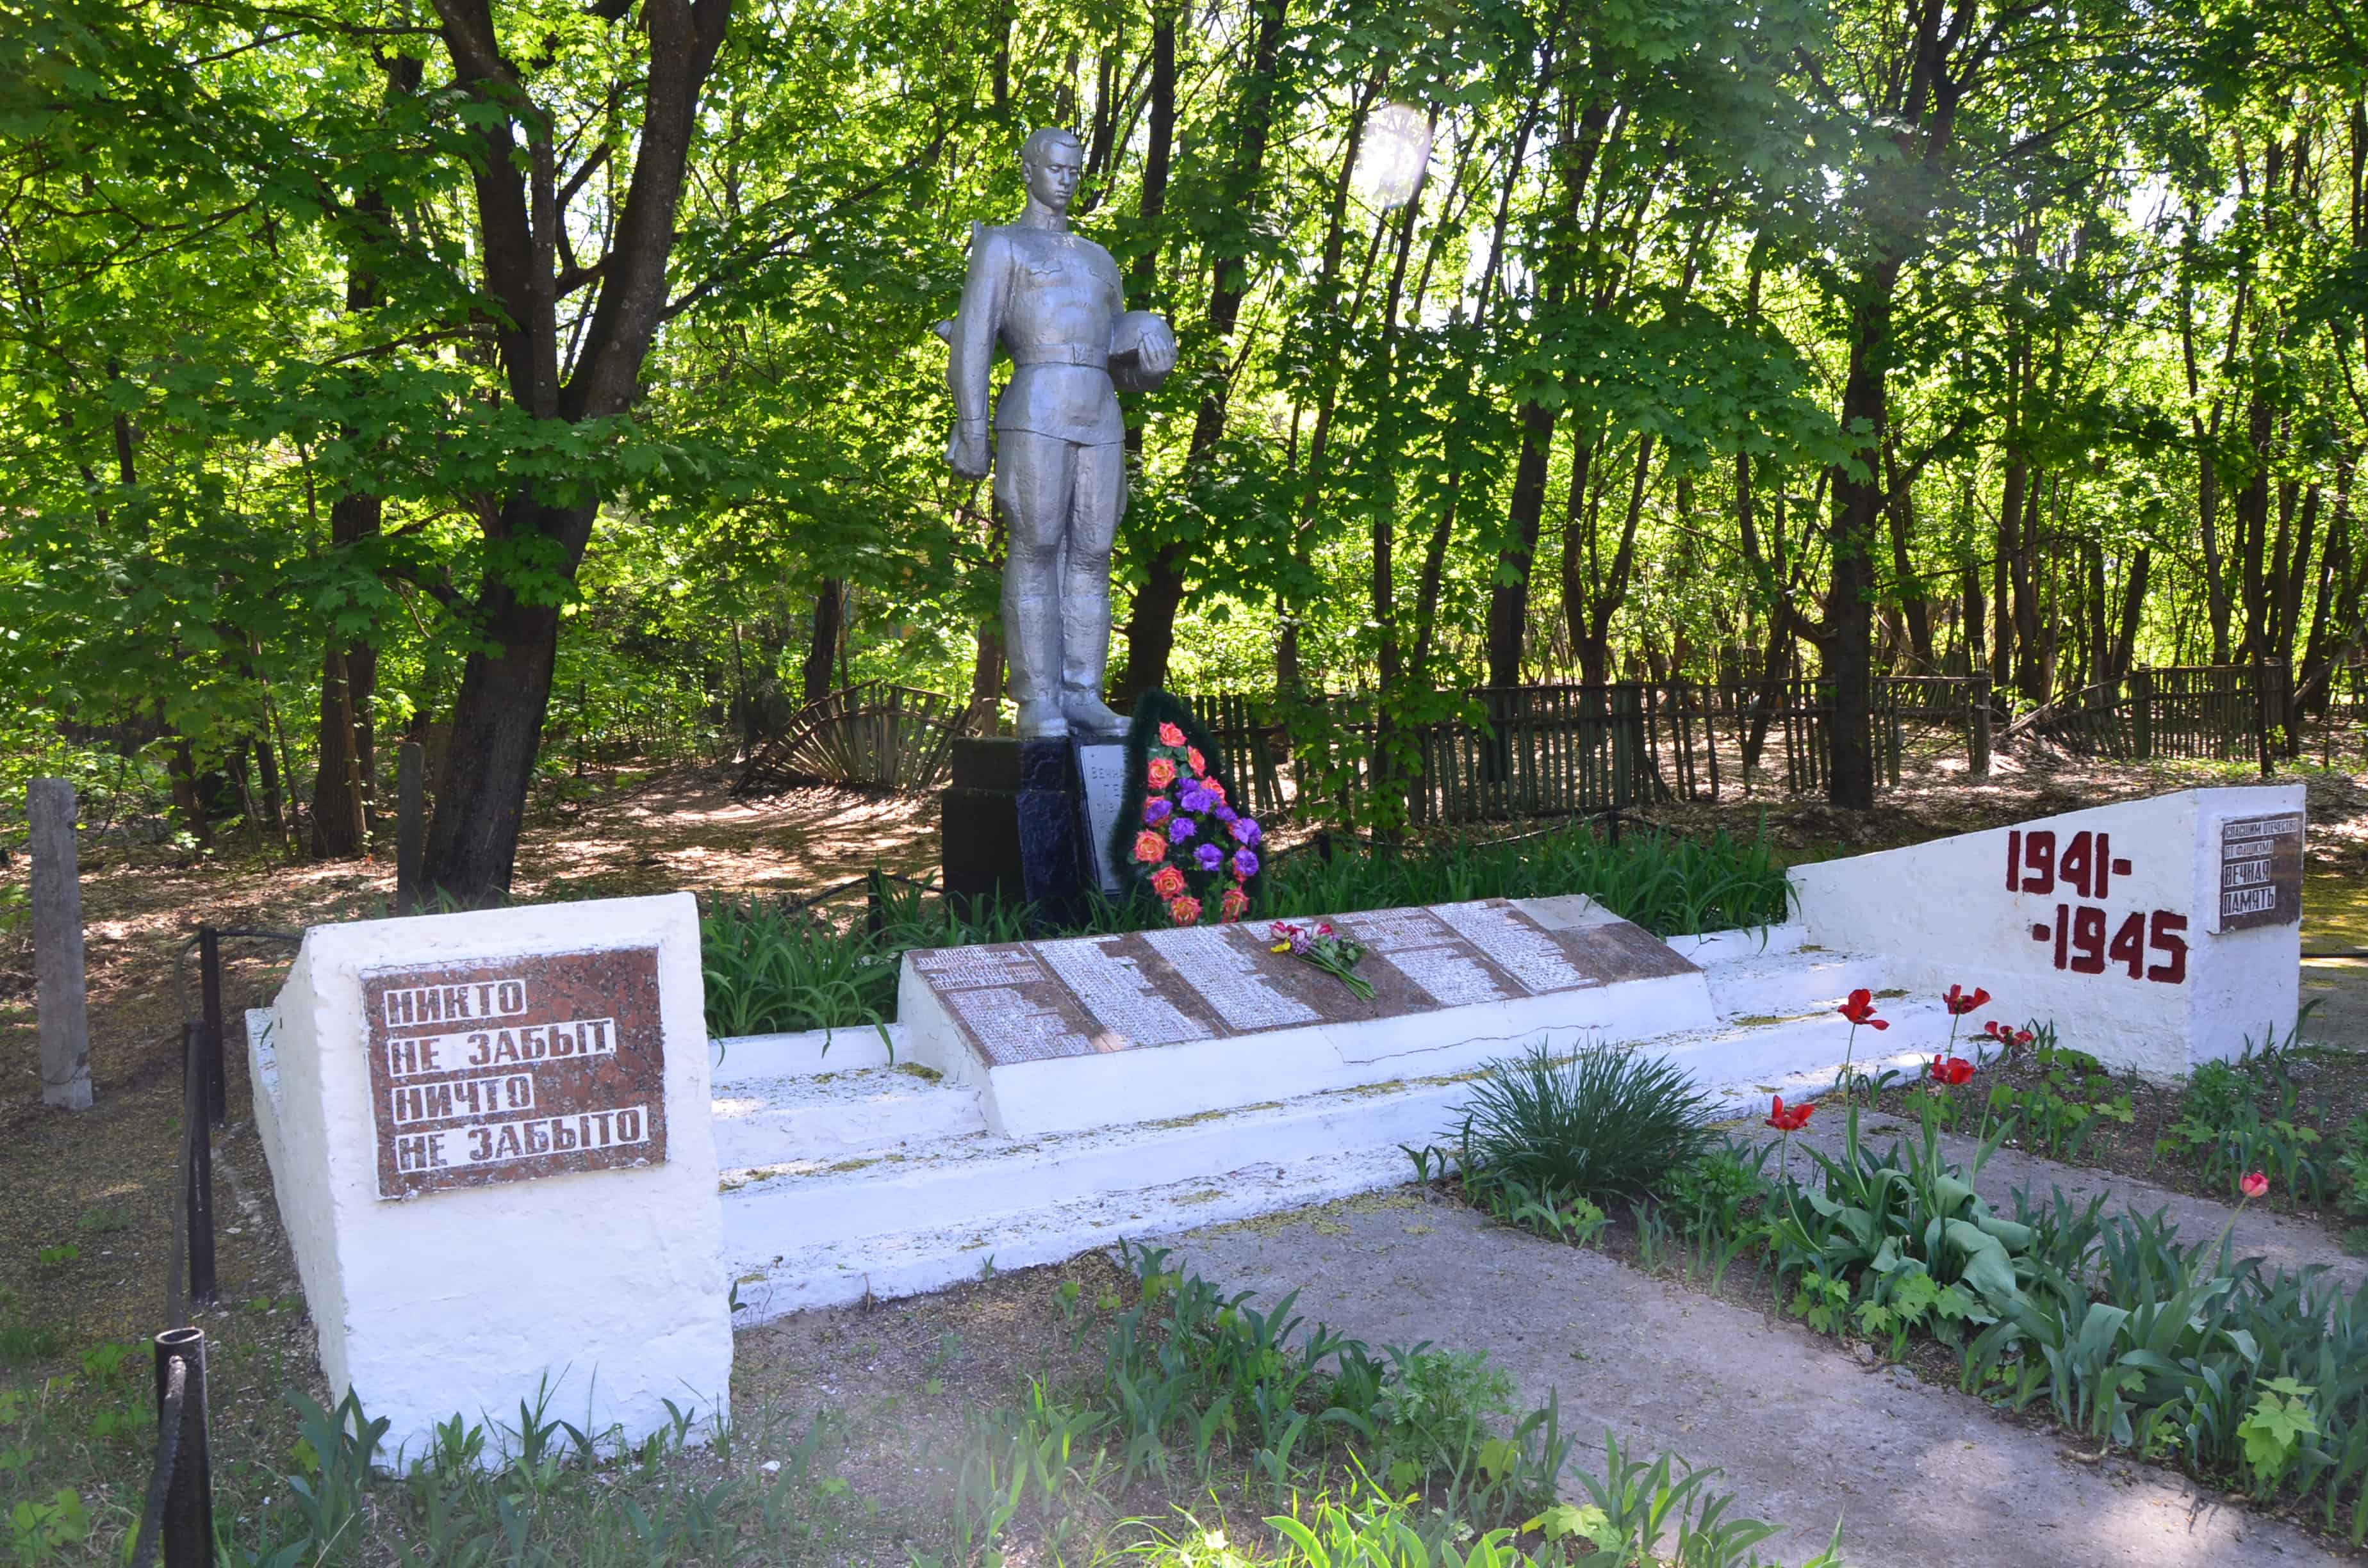 Victory Day memorial in Kopachi, Chernobyl Exclusion Zone, Ukraine